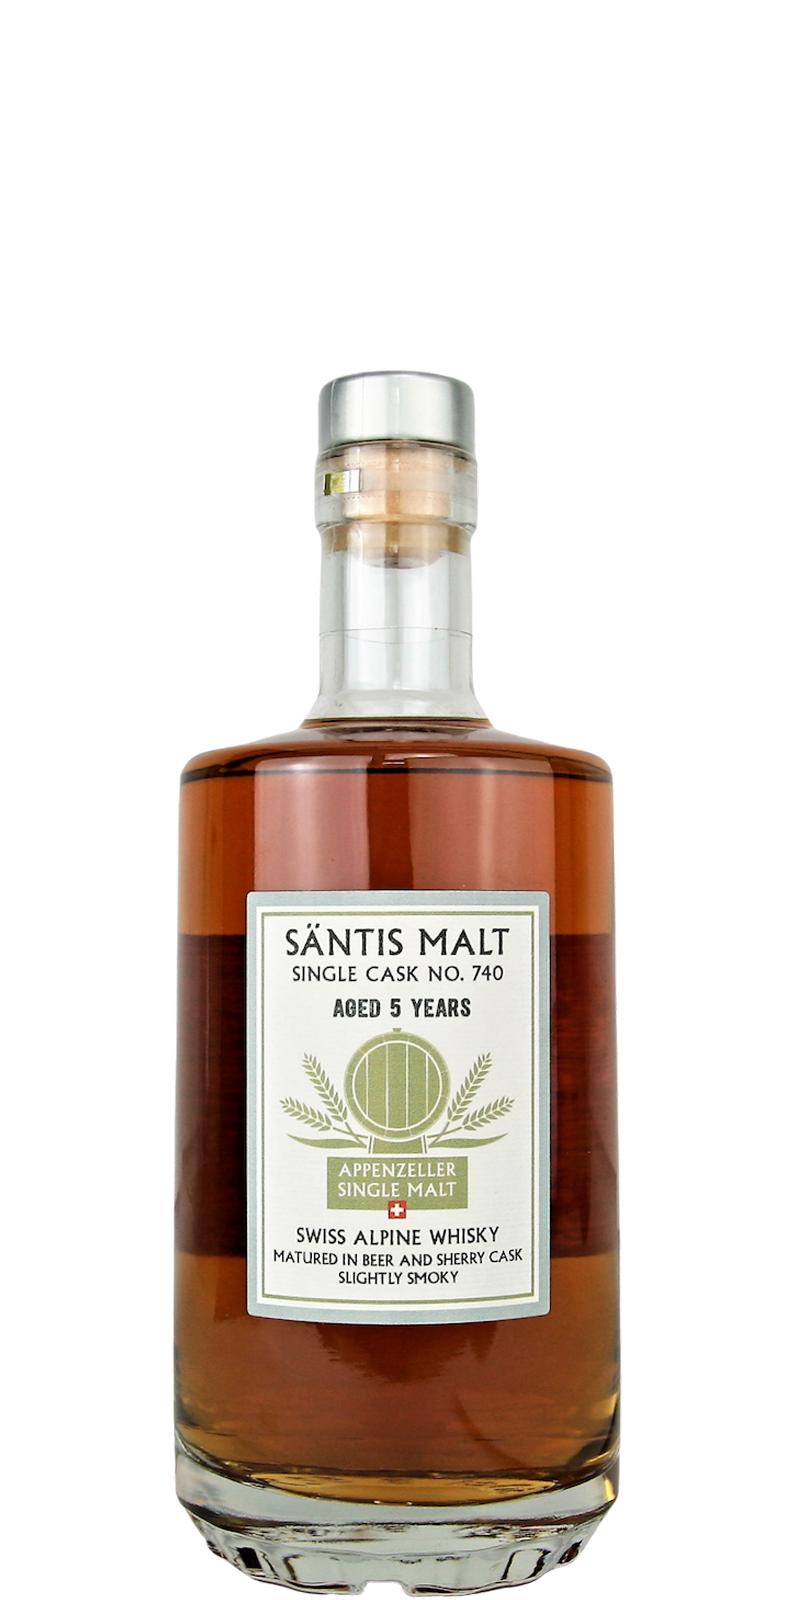 Santis Malt 5yo Private Cask Selection Beer and Sherry Cask 740 Globus Selection 47.8% 500ml